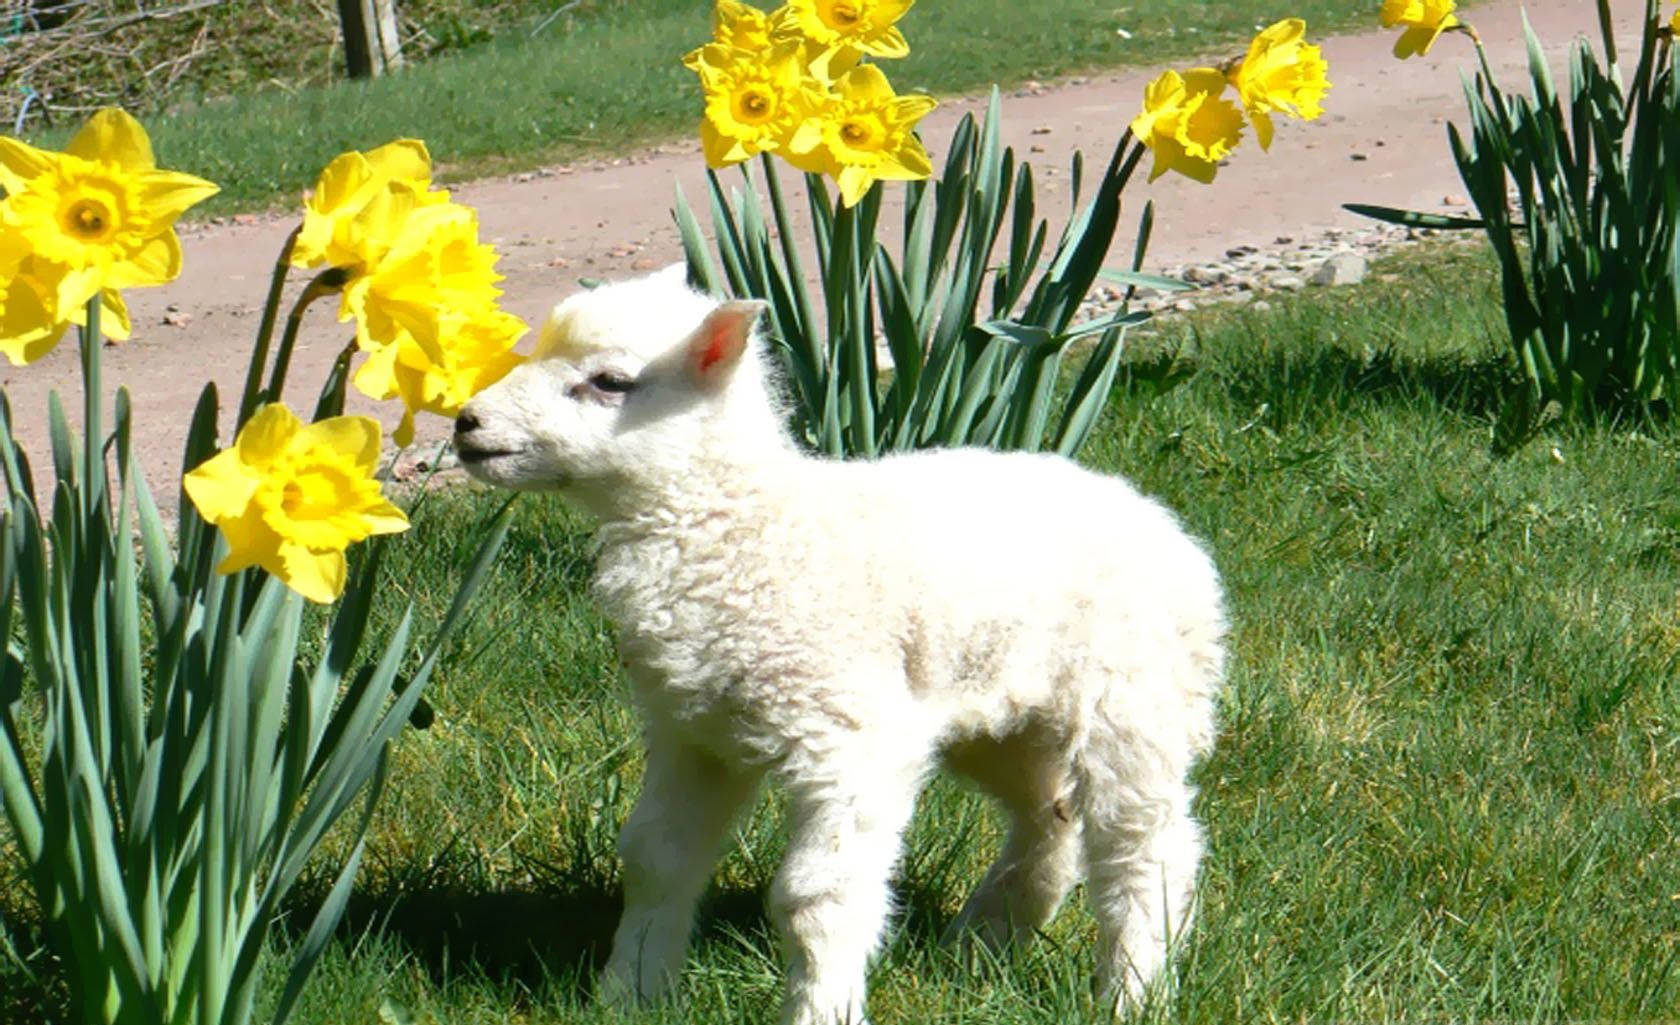 Adorable Lamb Amidst Vibrant Yellow Flowers Wallpaper